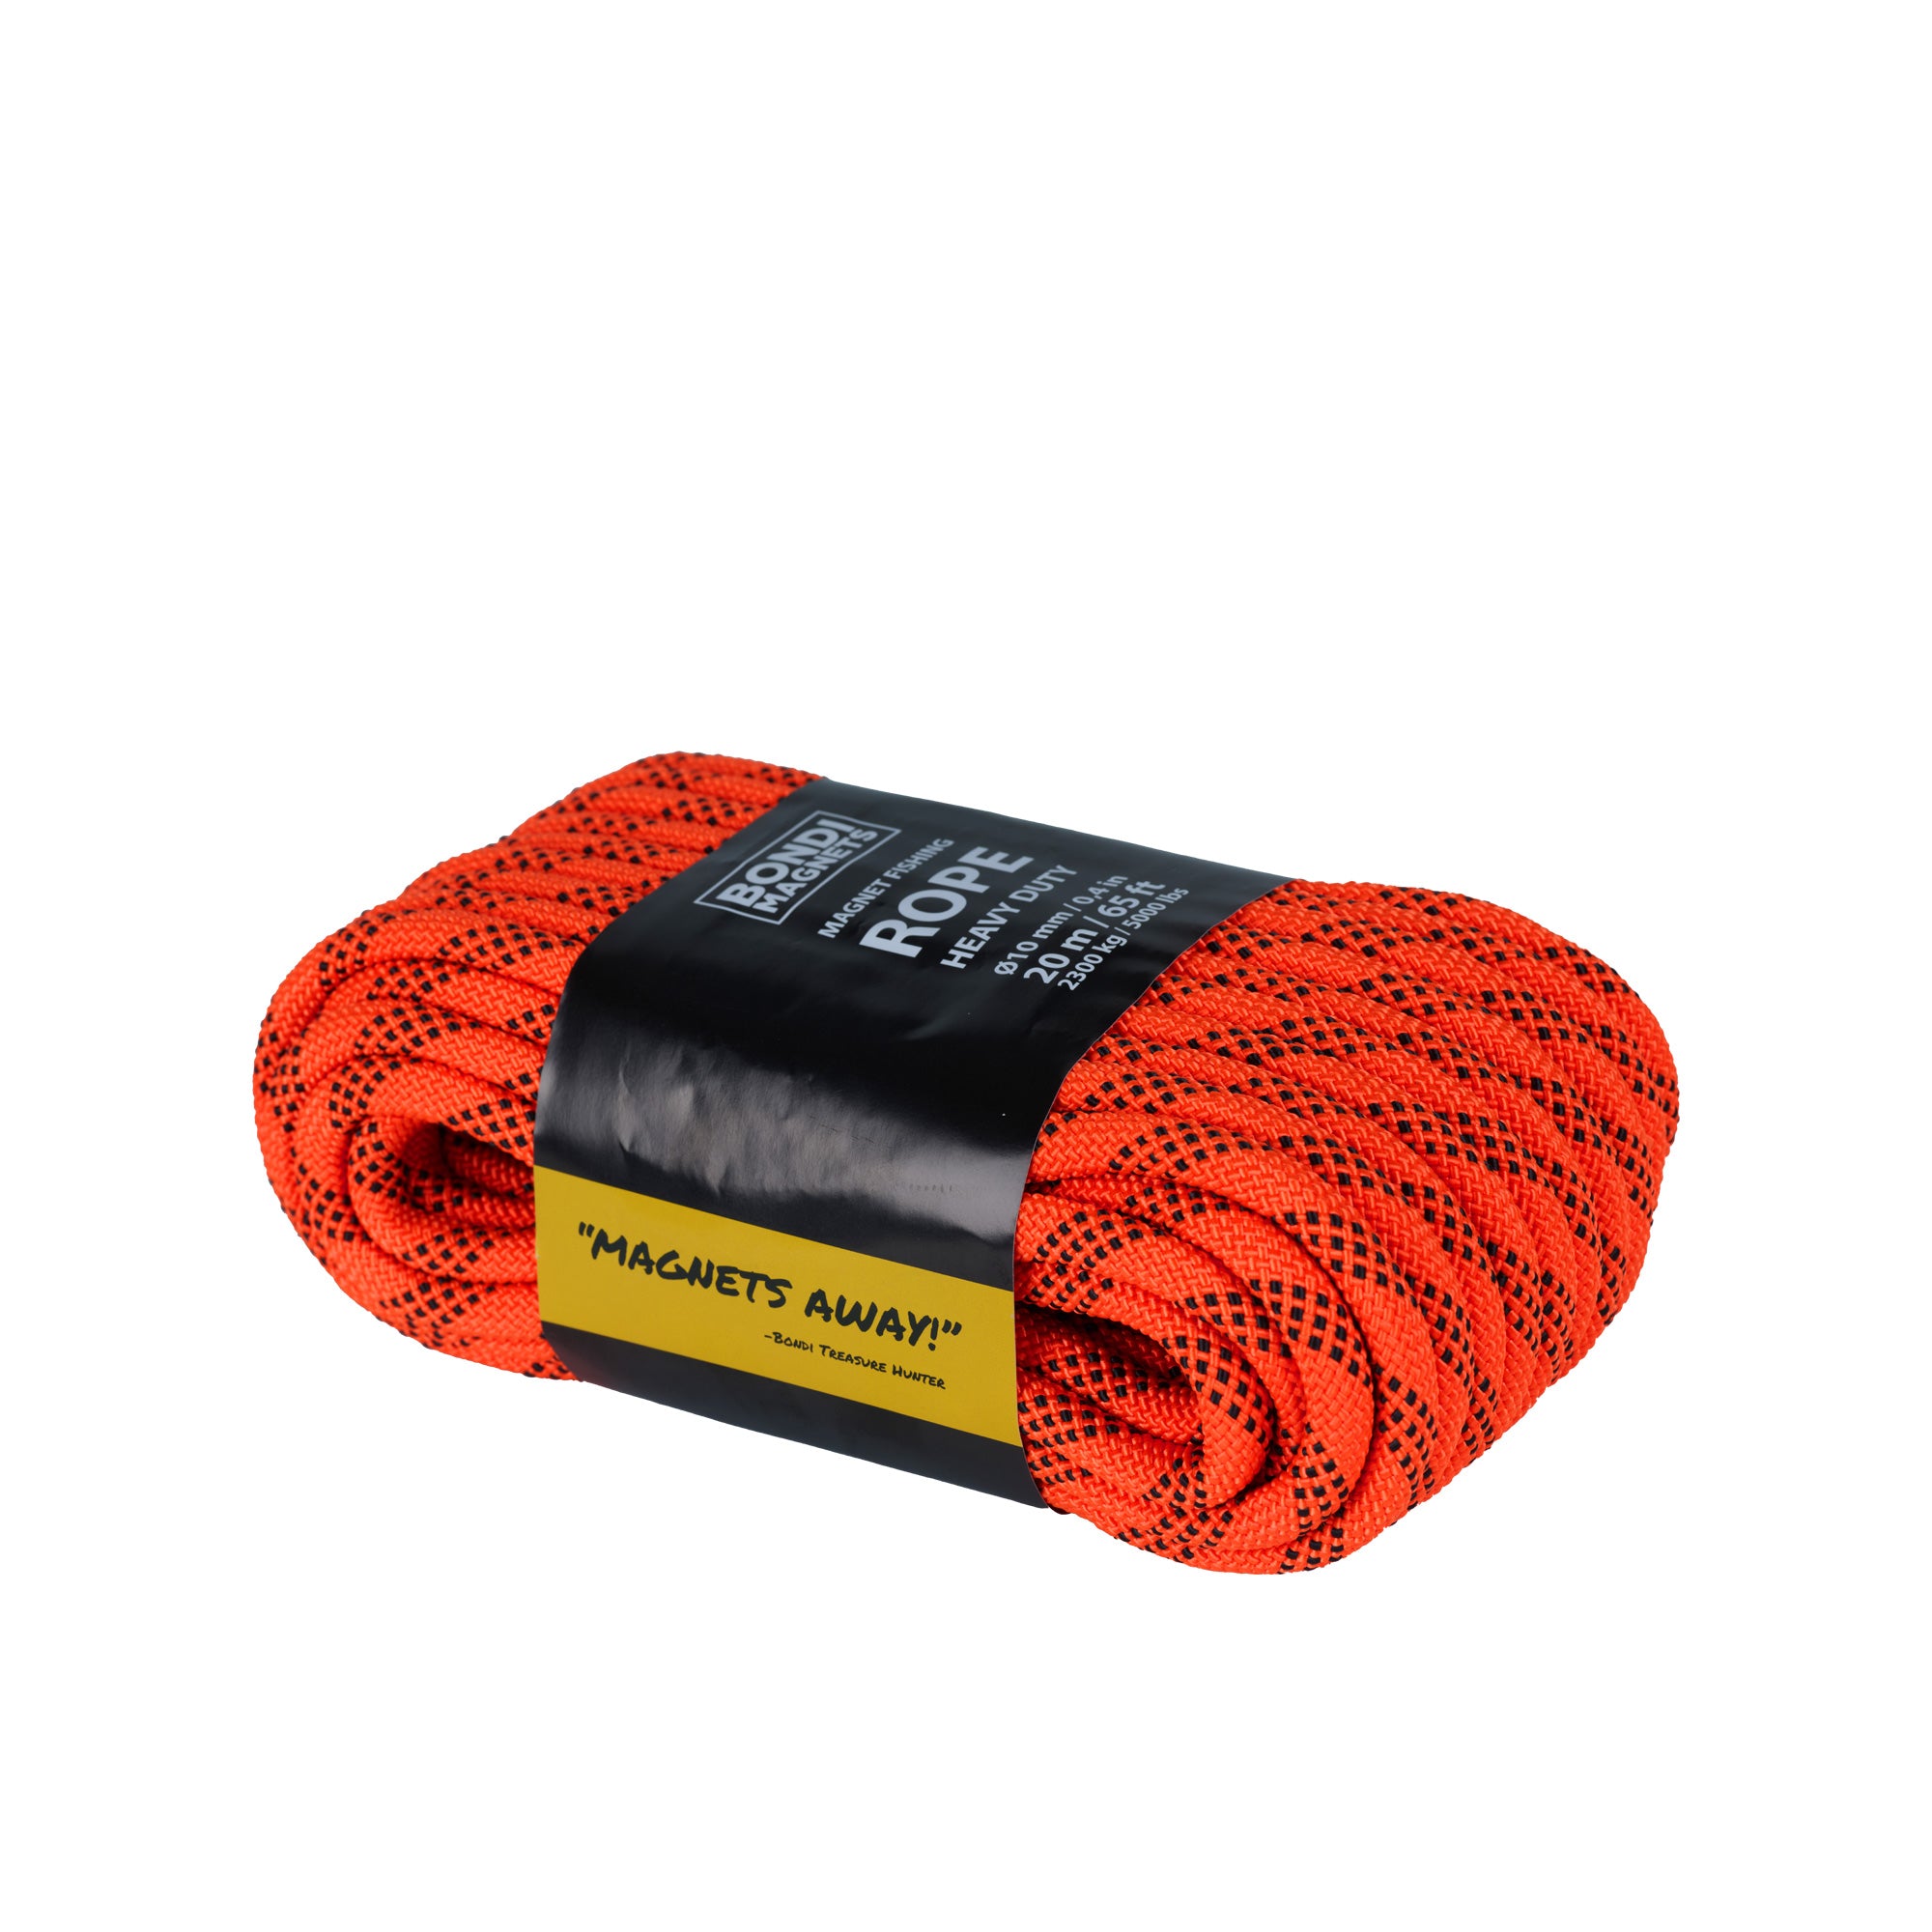 Bondi Heavy Duty Rope 10mm, 20 meter (65ft.) – Bondi Magnets, specially  made for magnet fishing